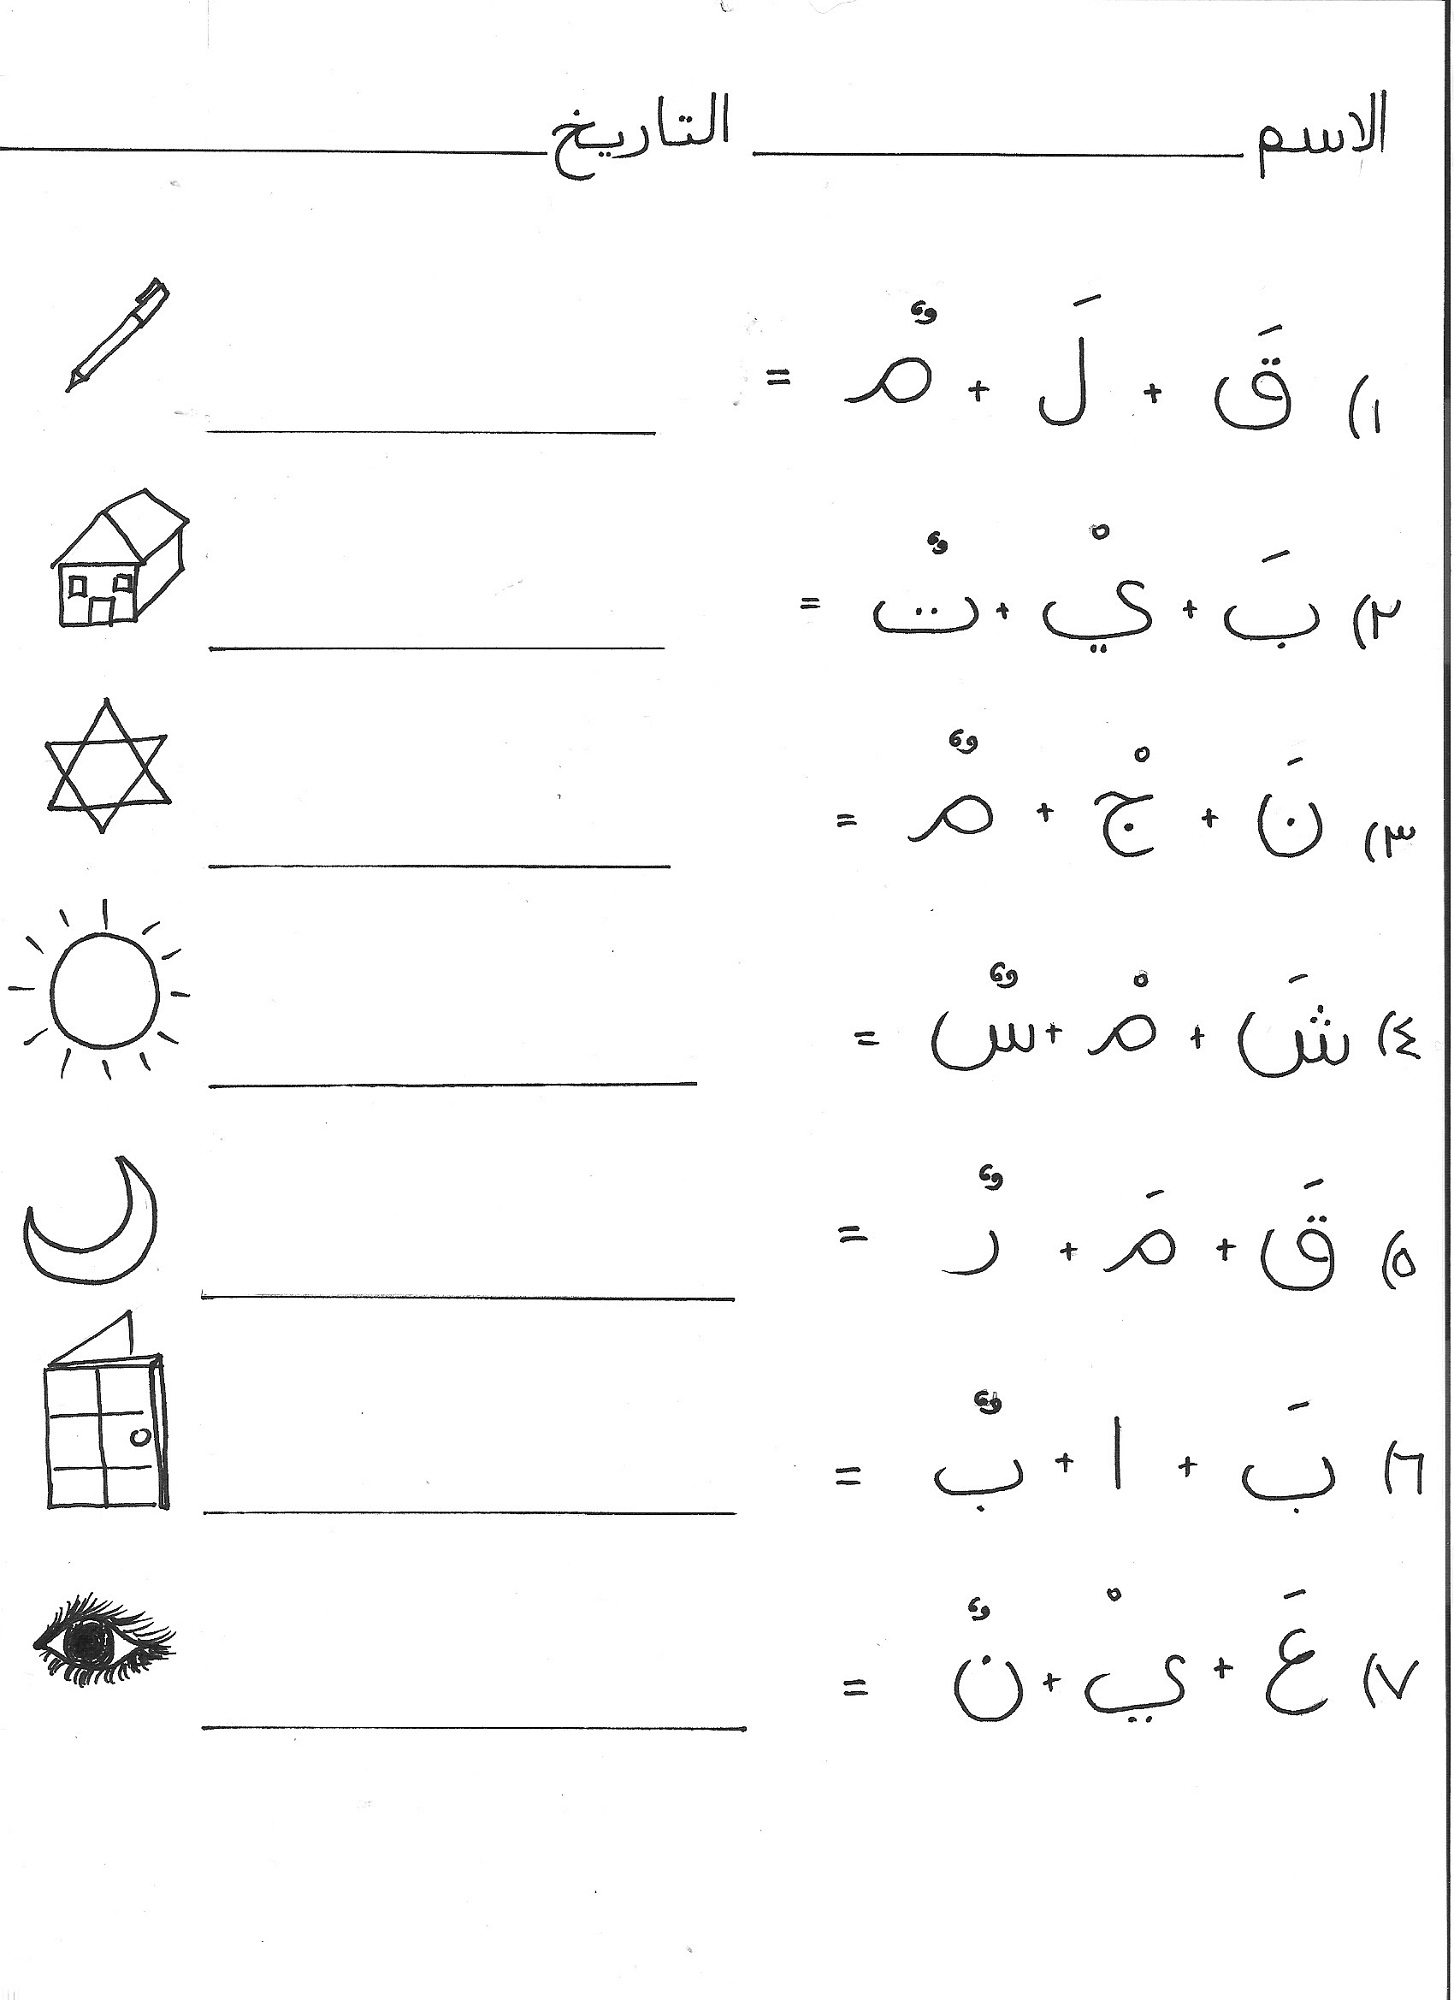 Arabic Alphabet Worksheets and Printables